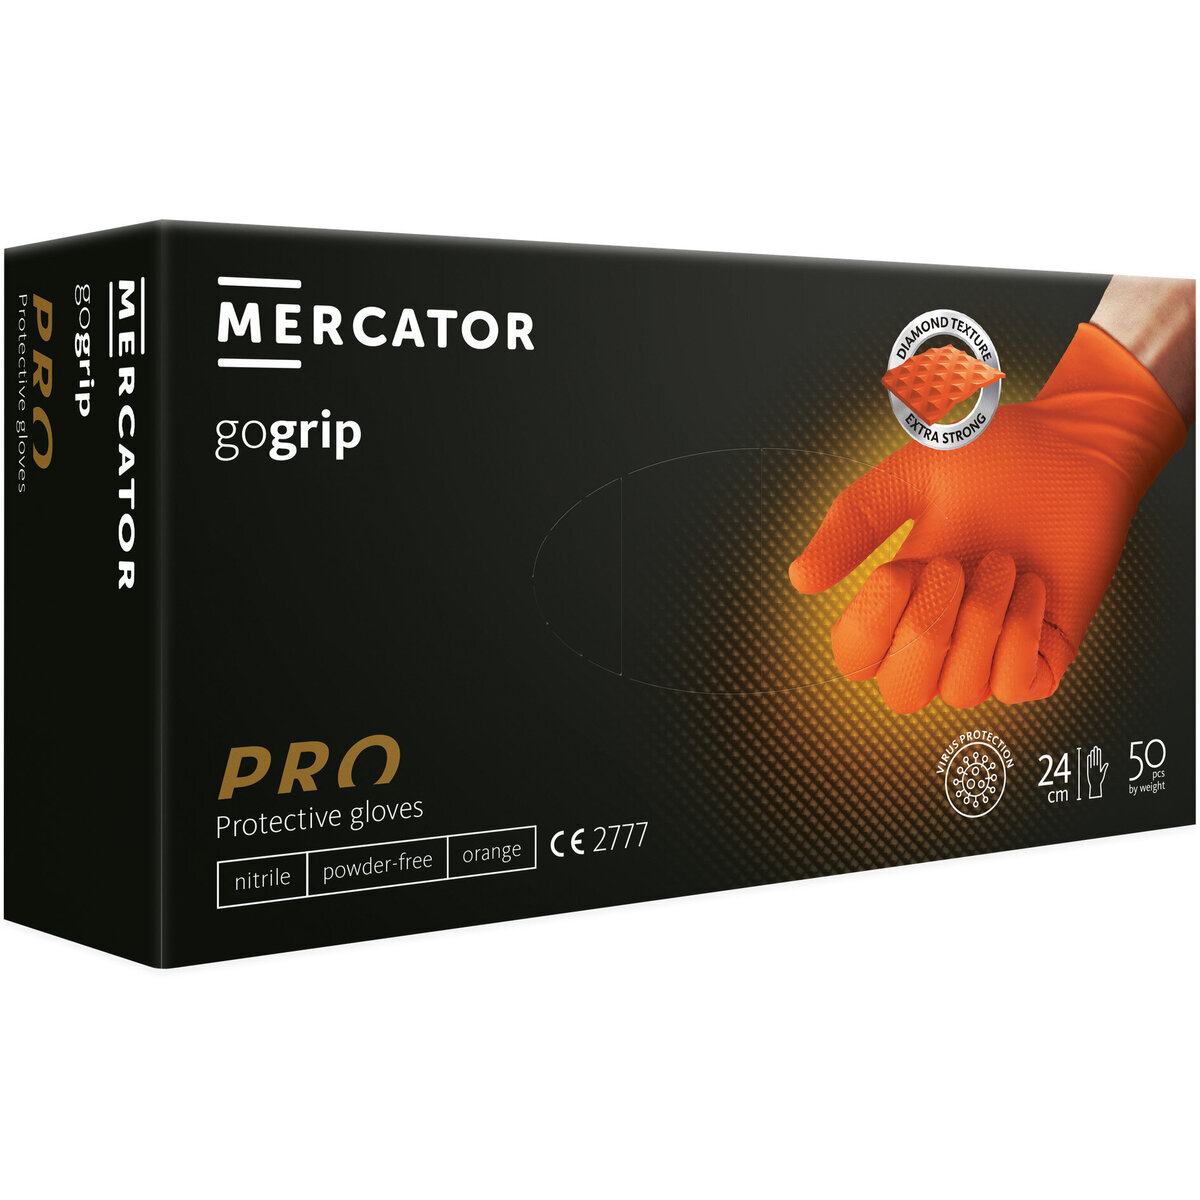 Nepudrované nitrilové rukavice MERCATOR gogrip (orange)